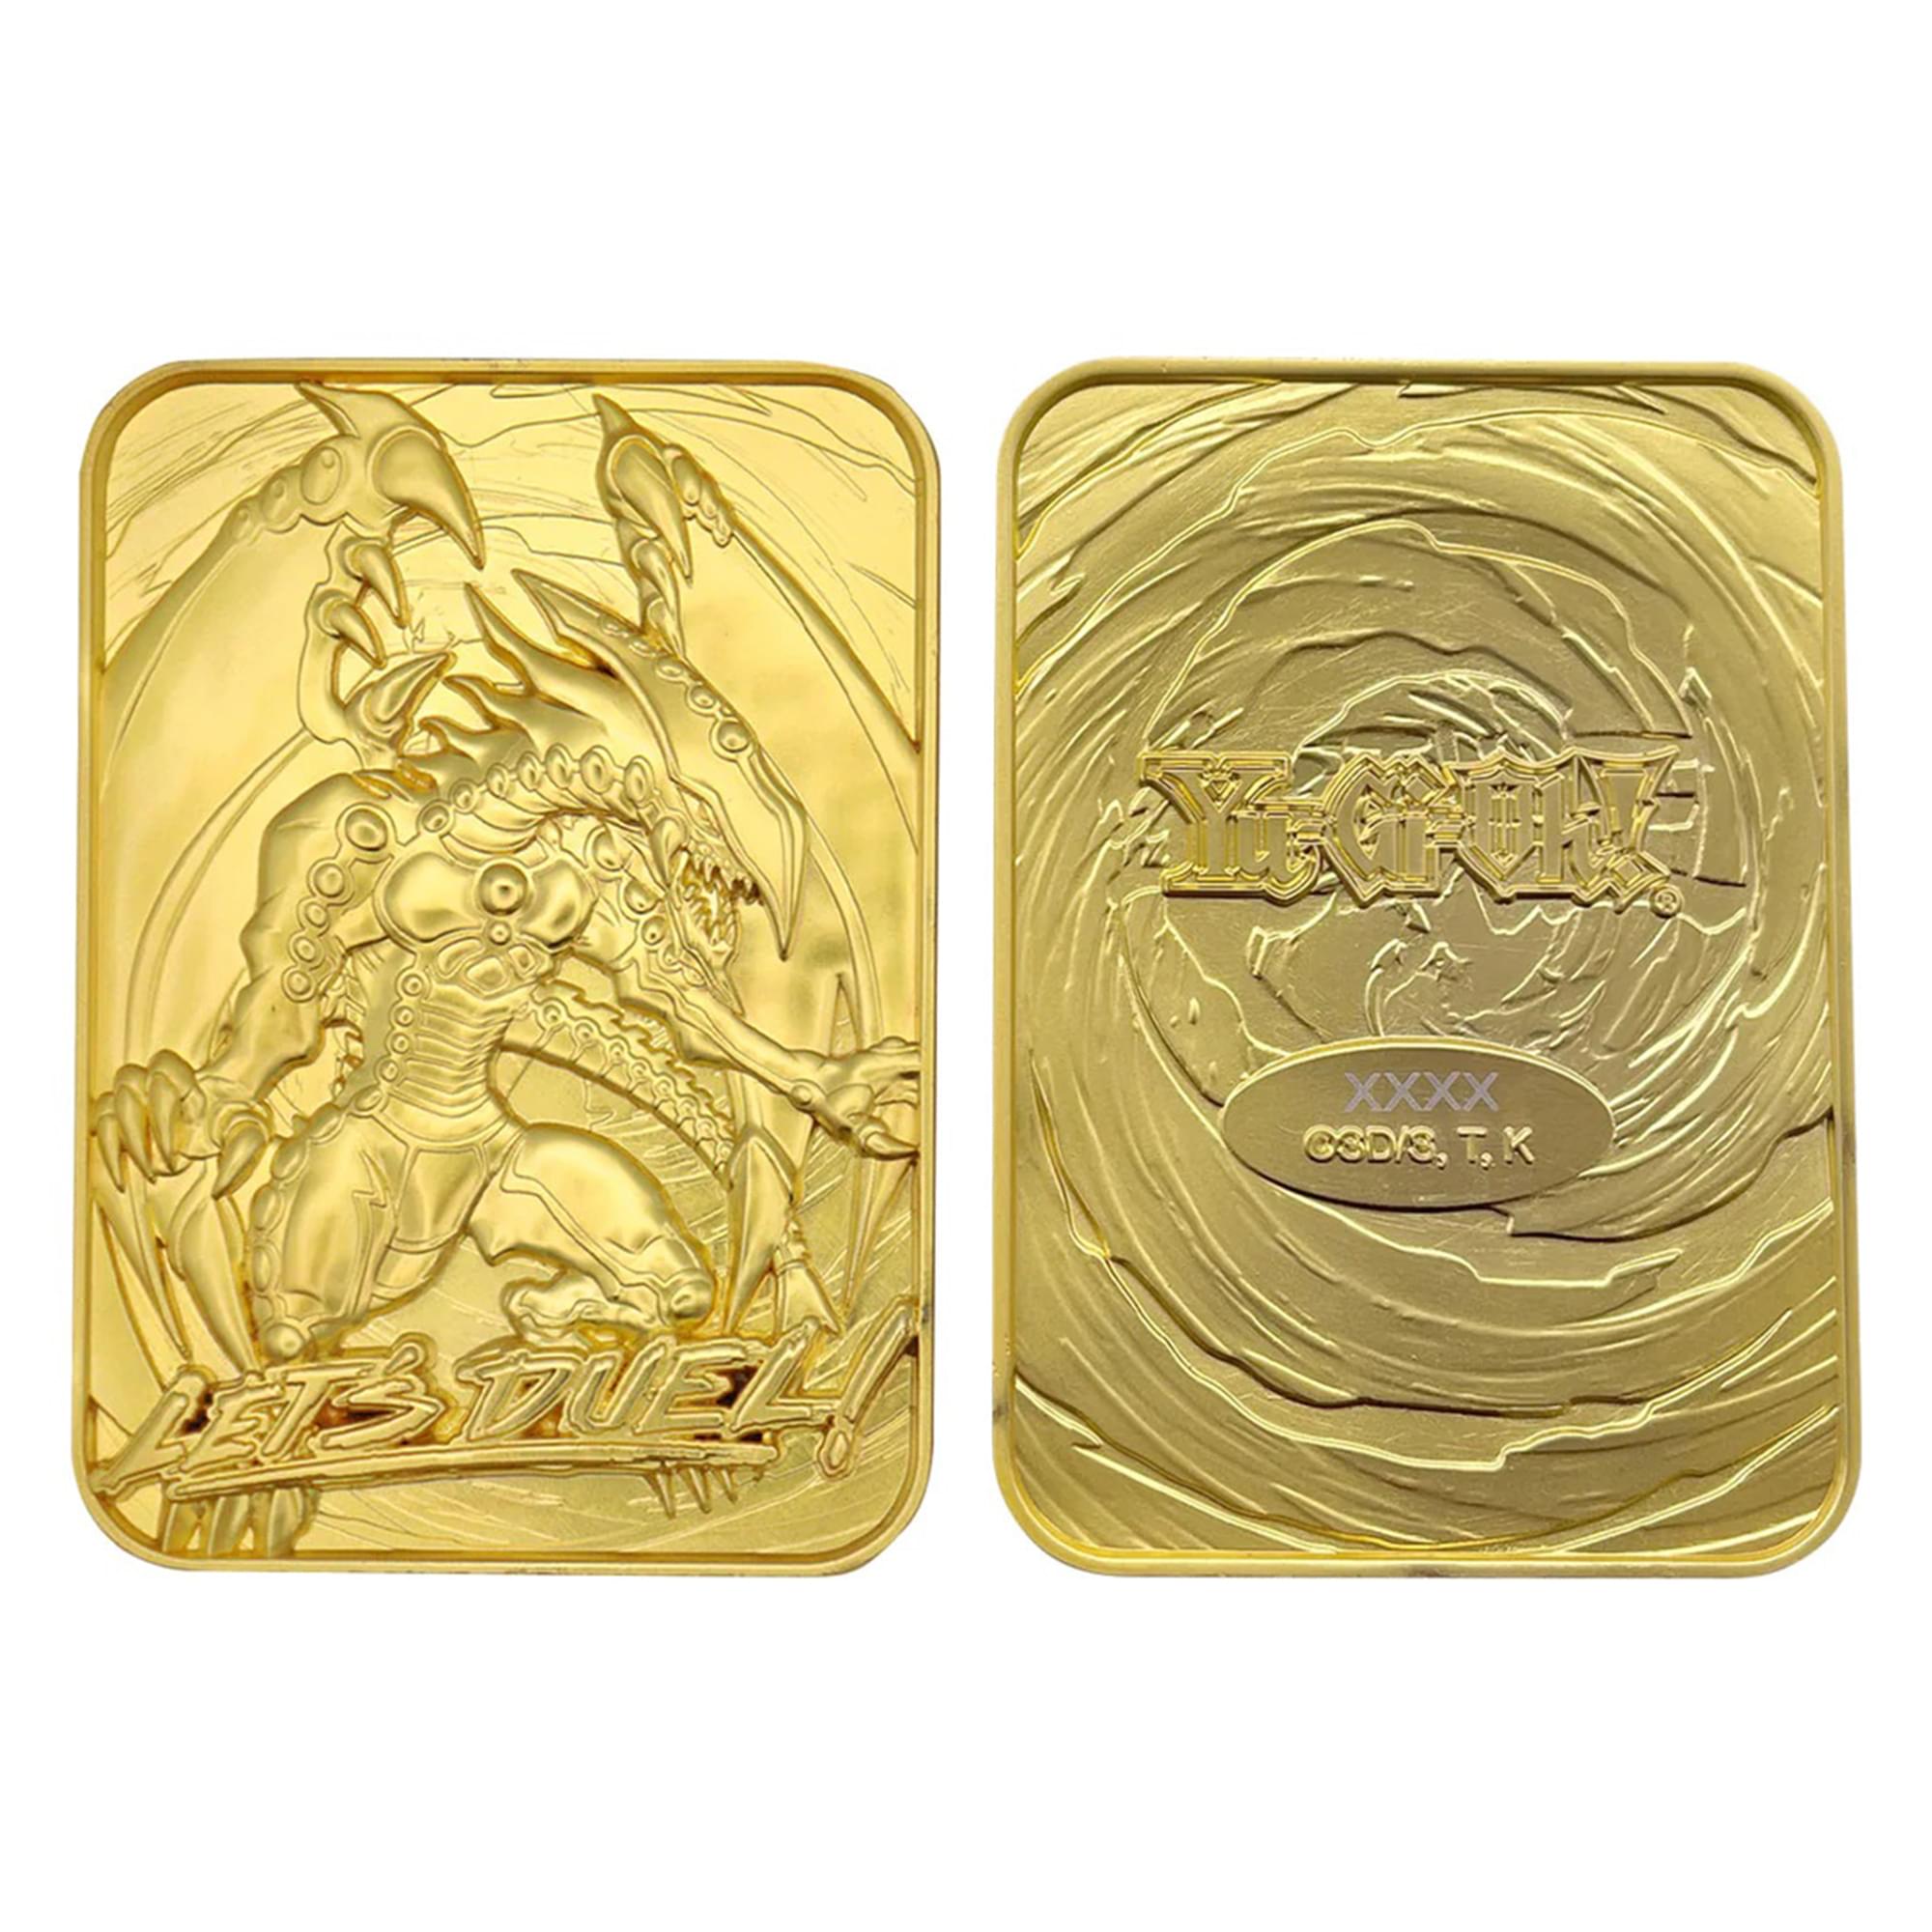 Yu-Gi-Oh! Limited Edition 24k Gold Plated Metal Card , Gandra Dragon